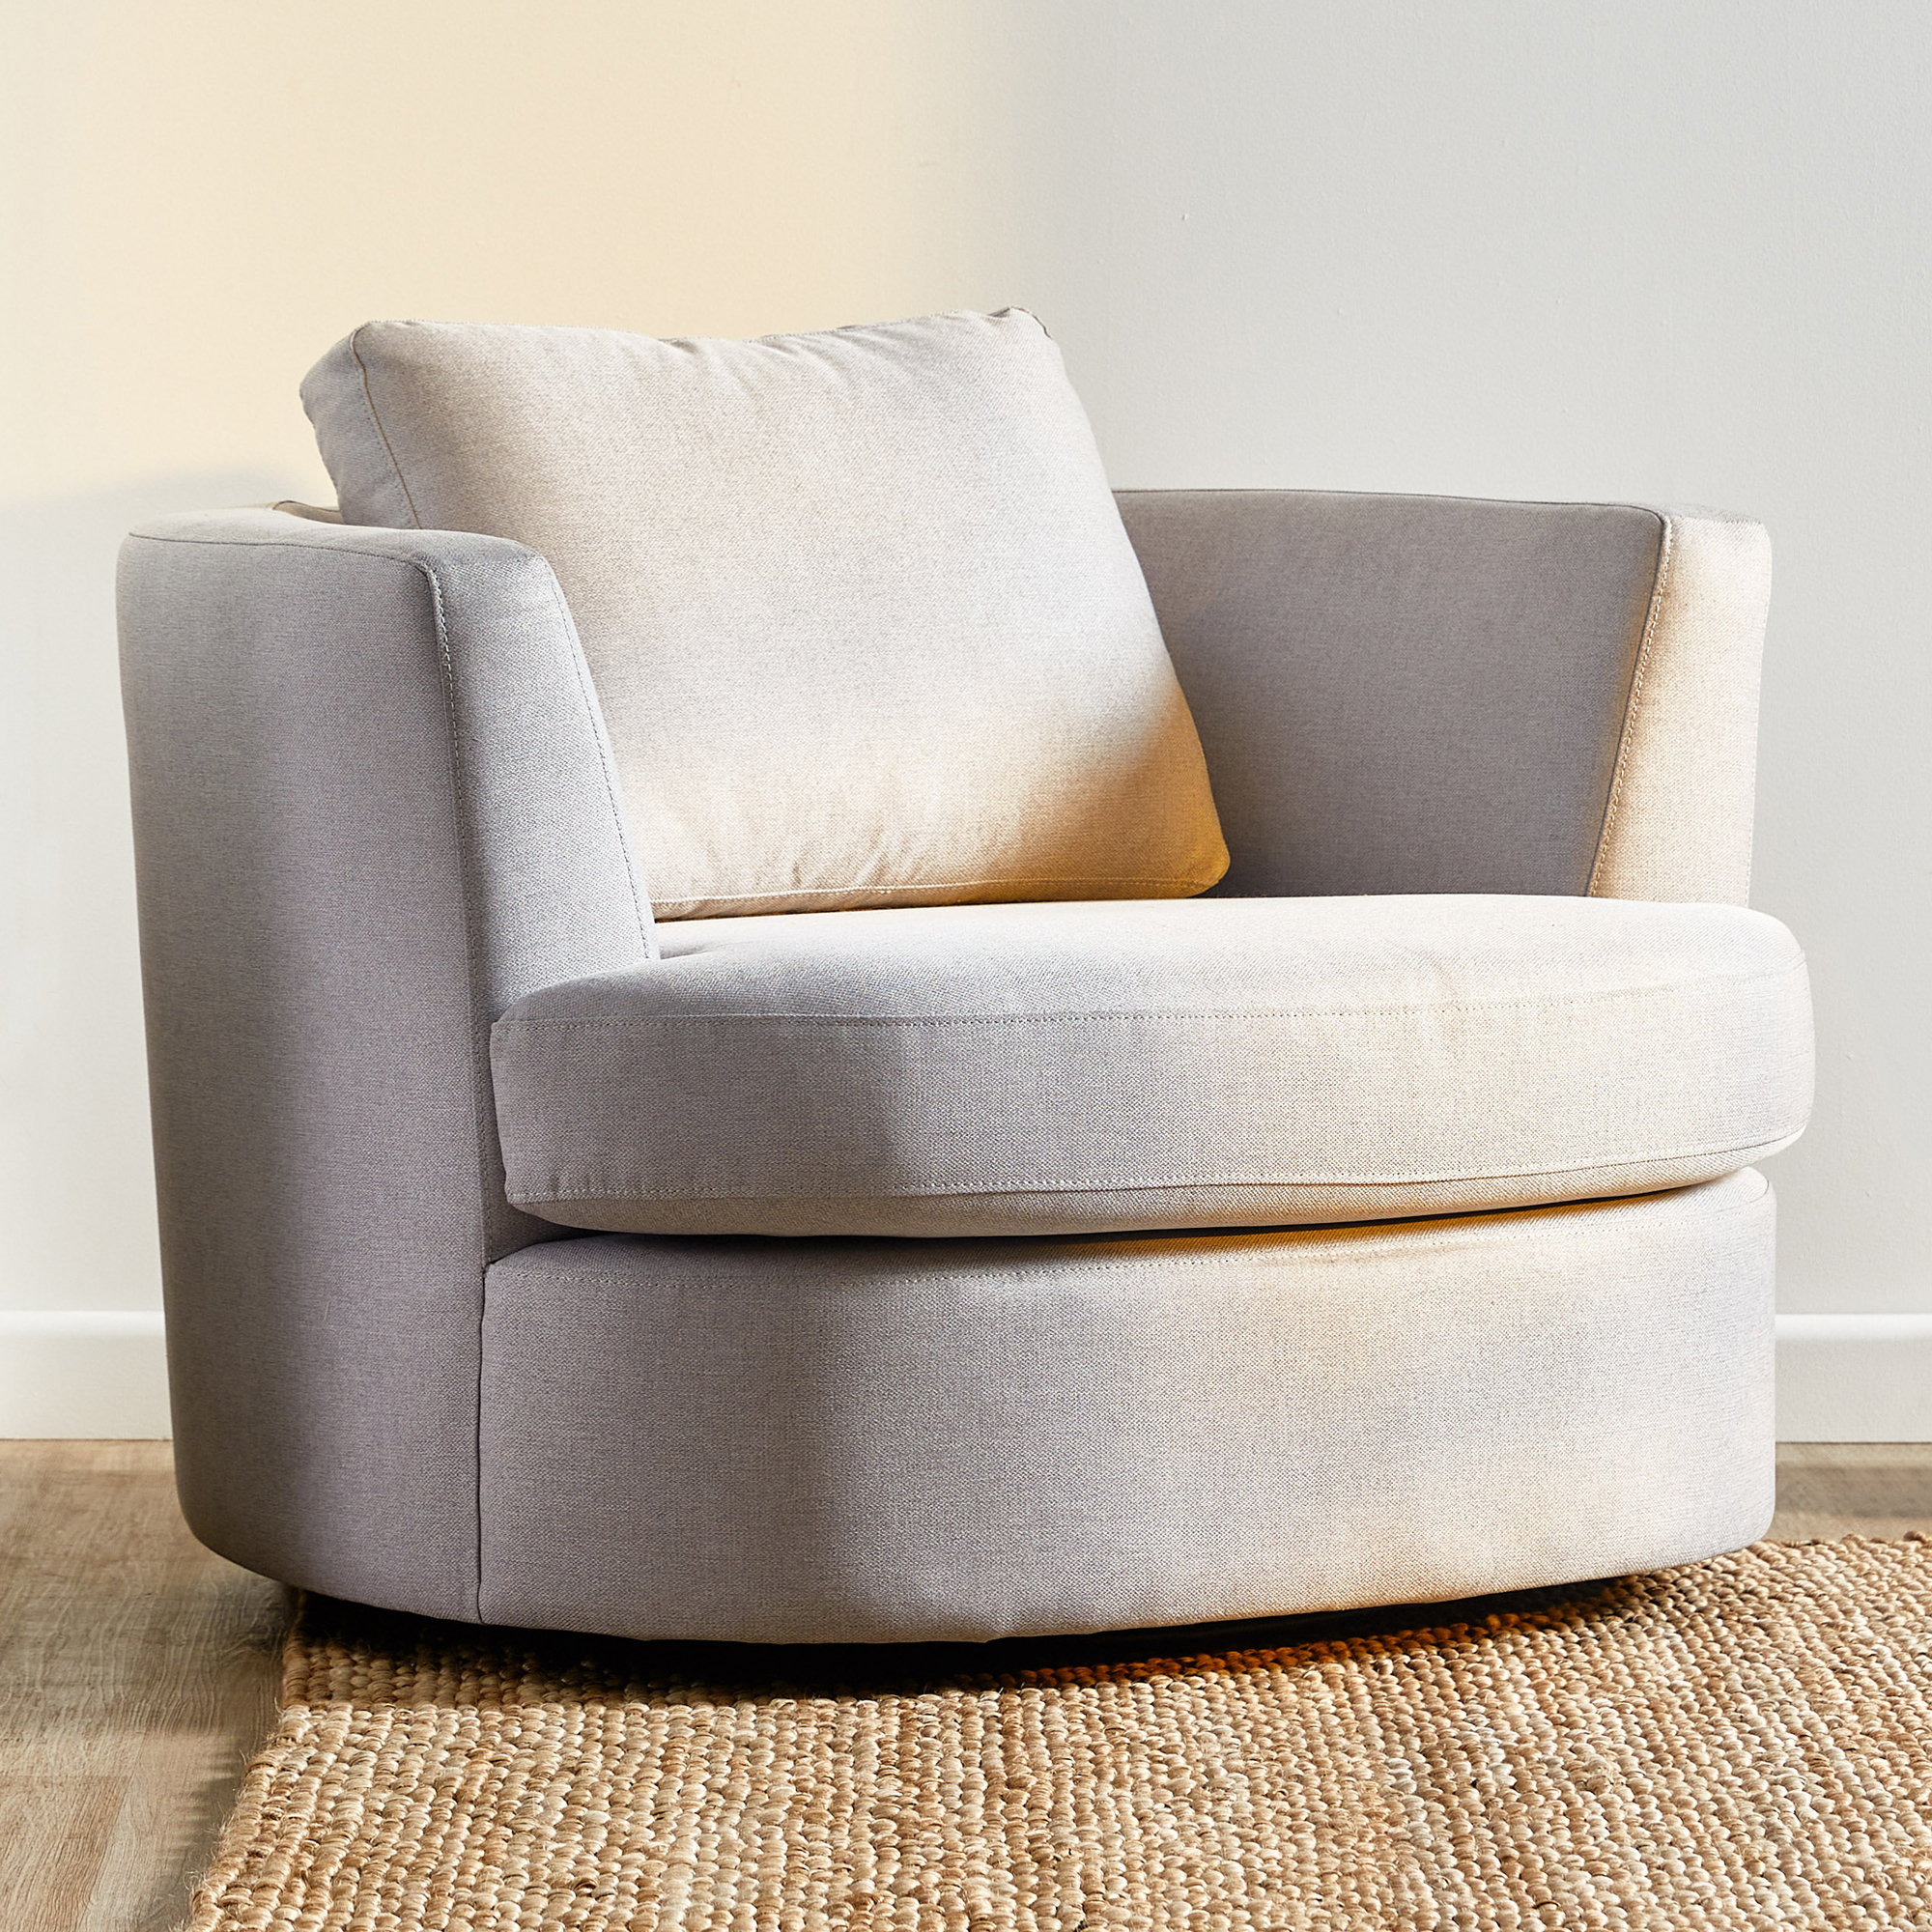 Webster Killian Oversized Swivel Armchair, Oversized Round Swivel Chairs For Living Room